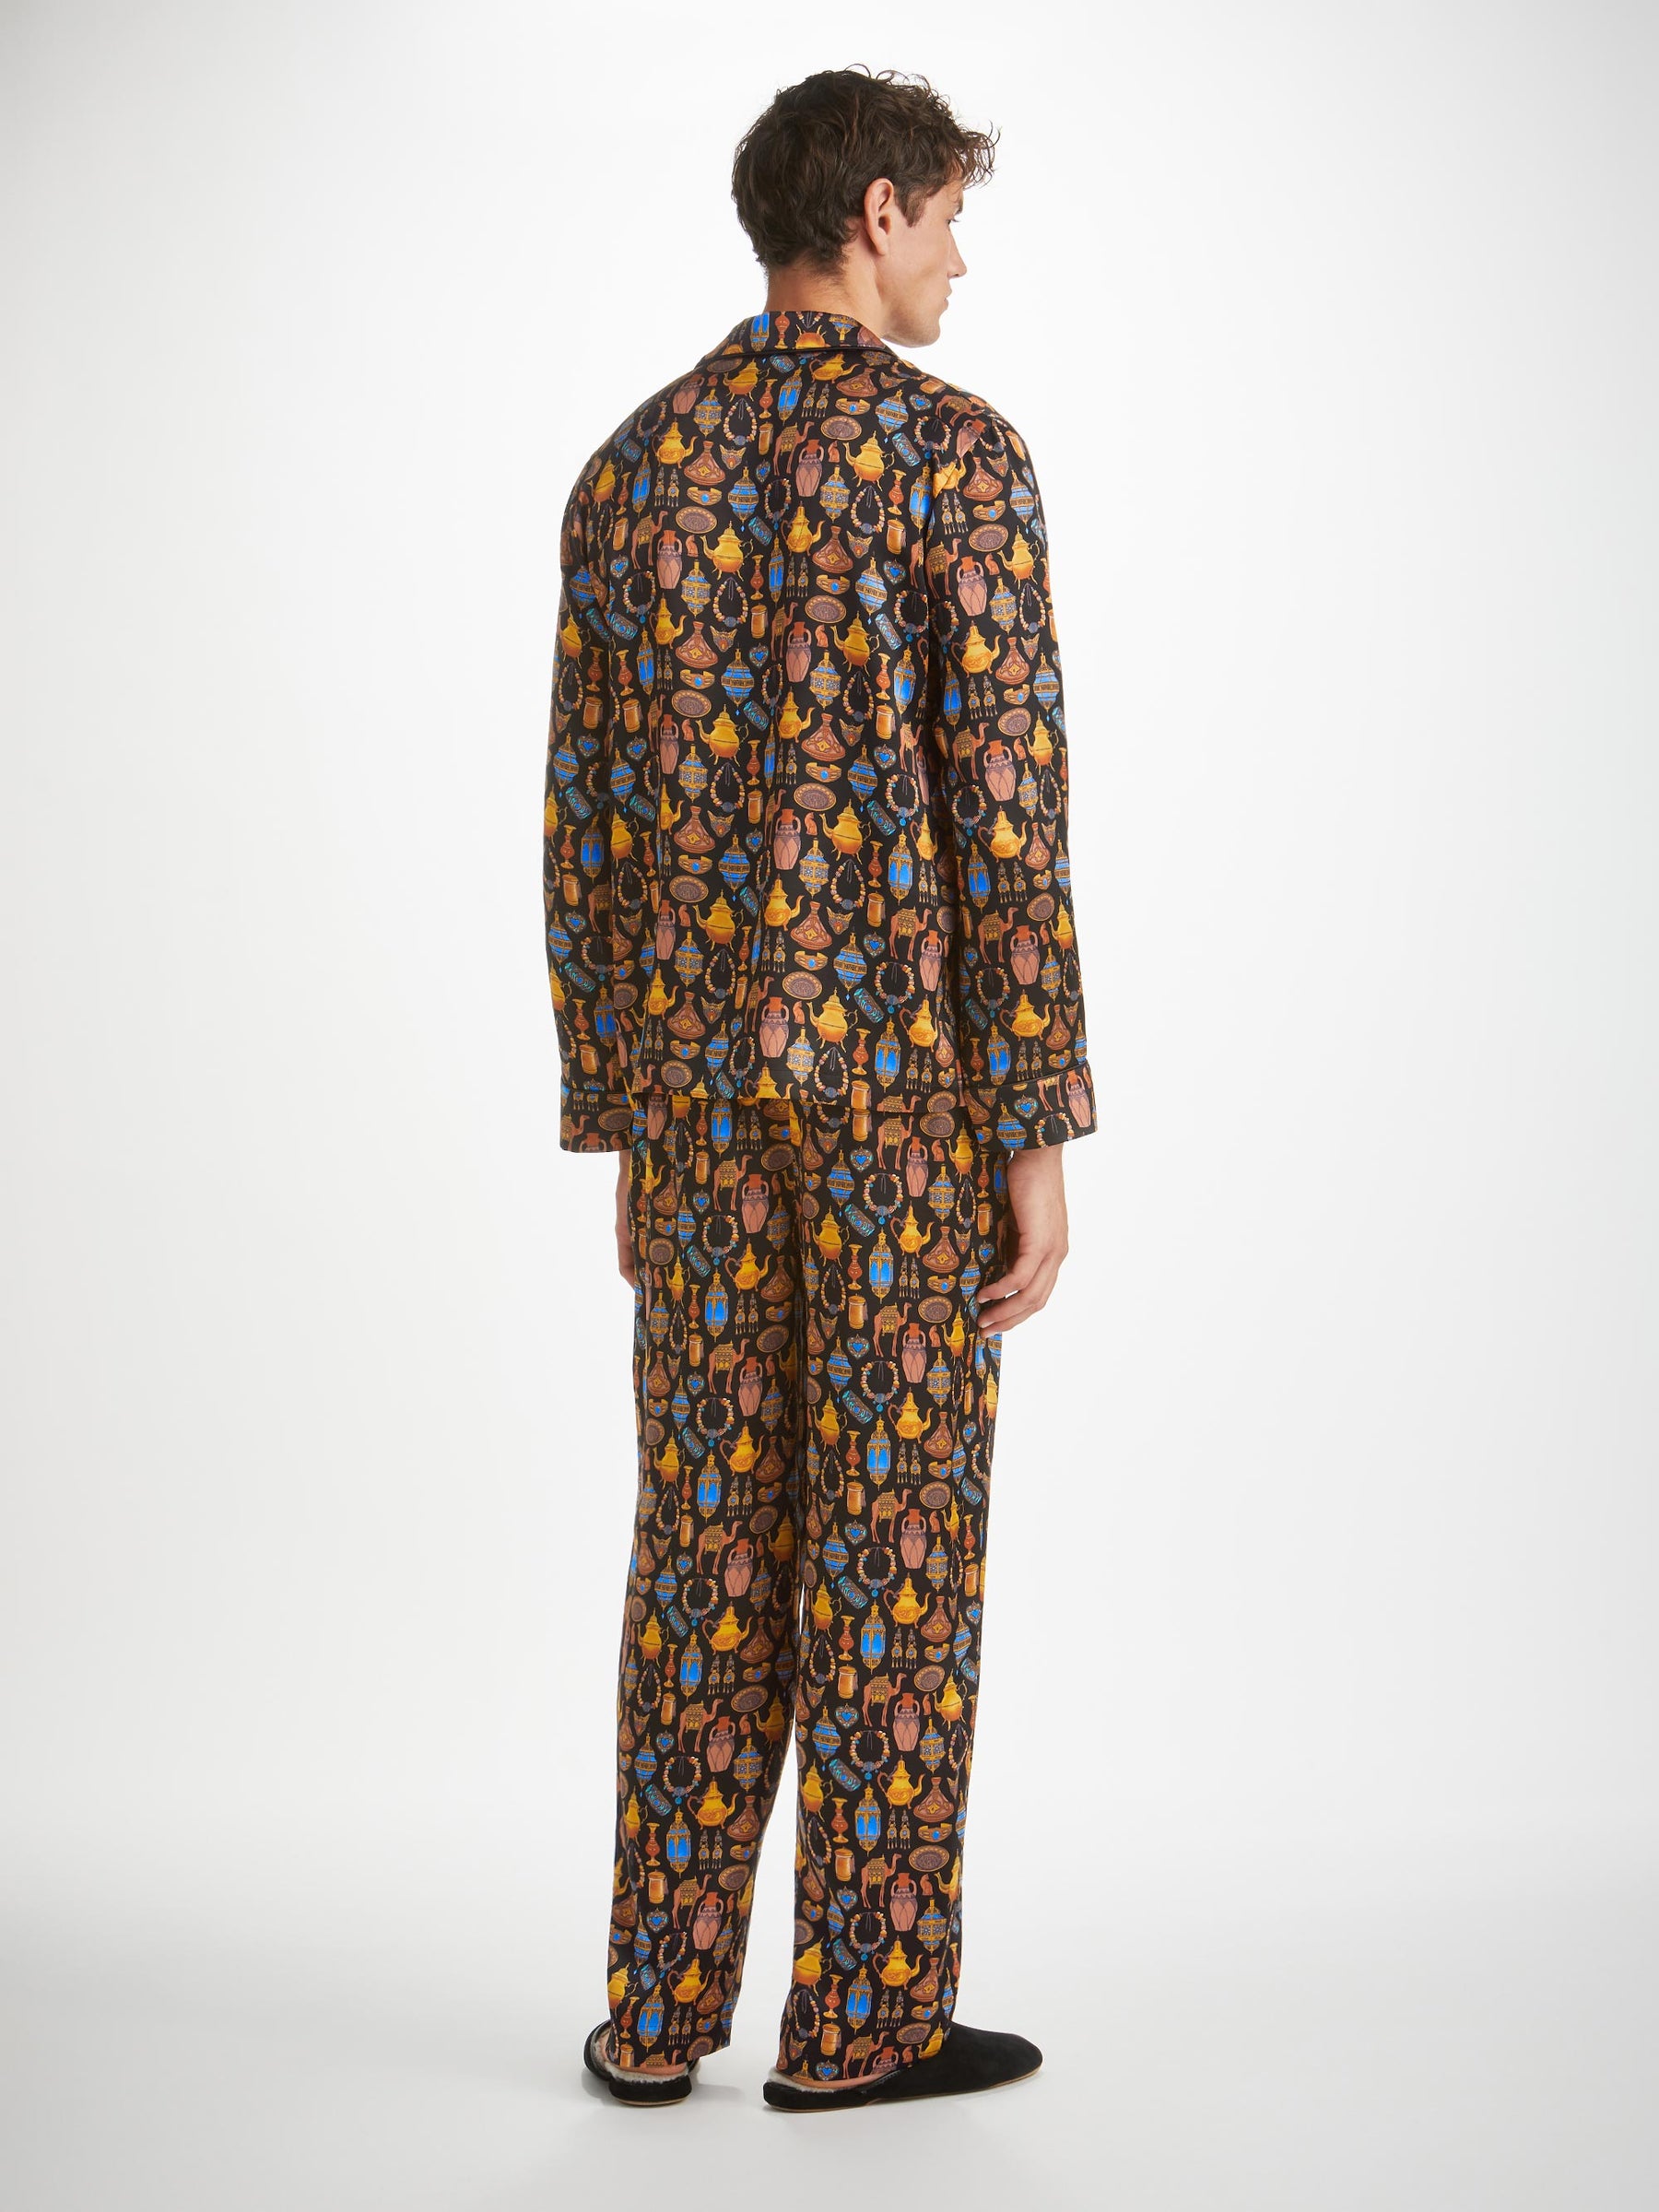 Men's Pyjamas Brindisi 100 Silk Satin Black